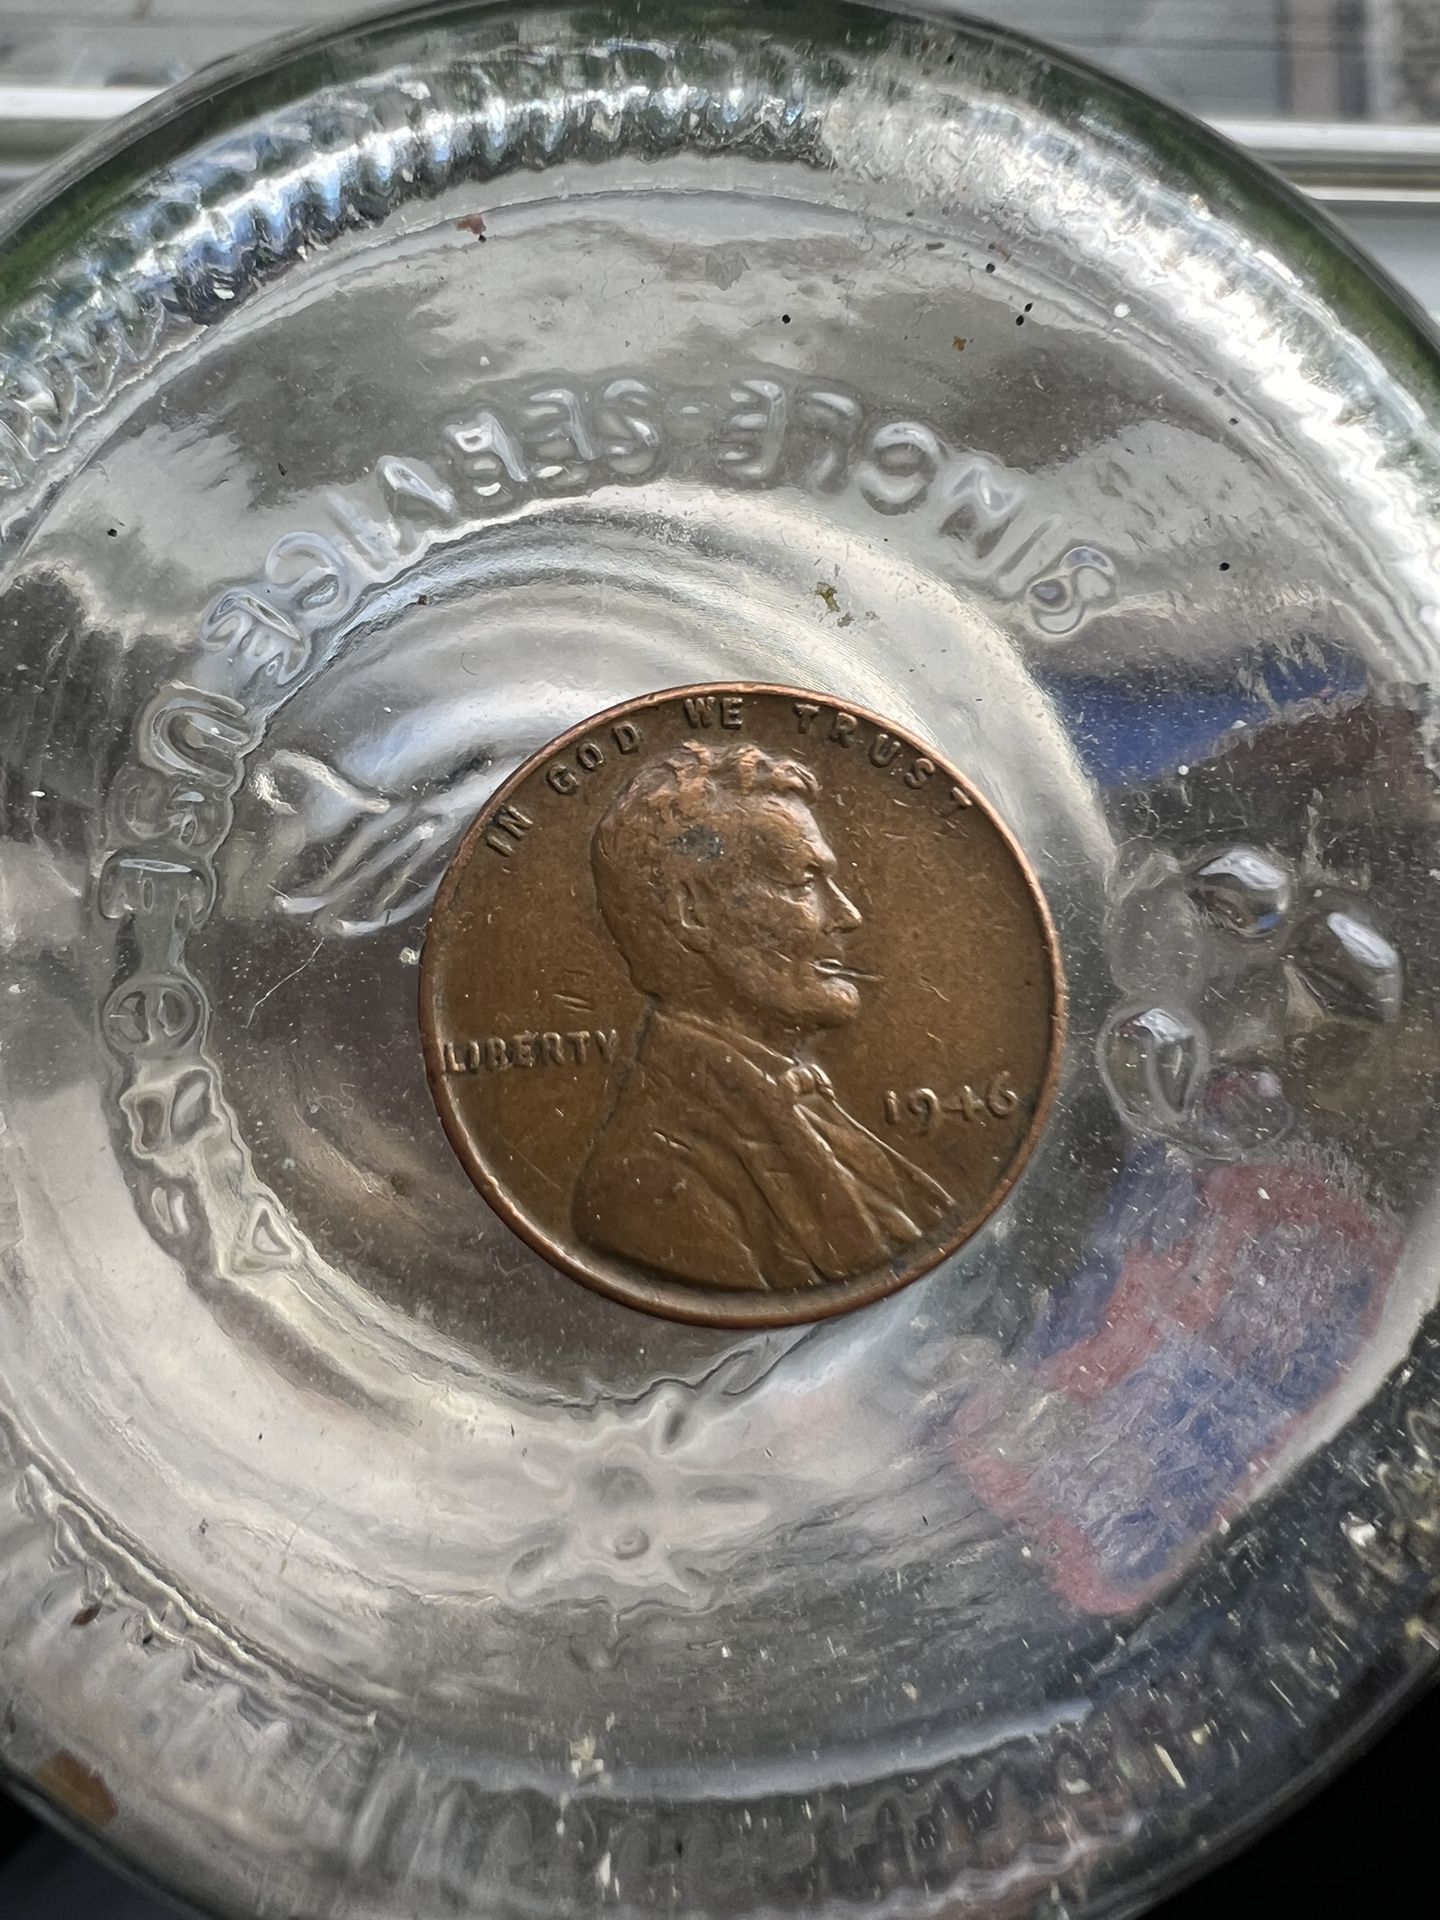 1947 Penny